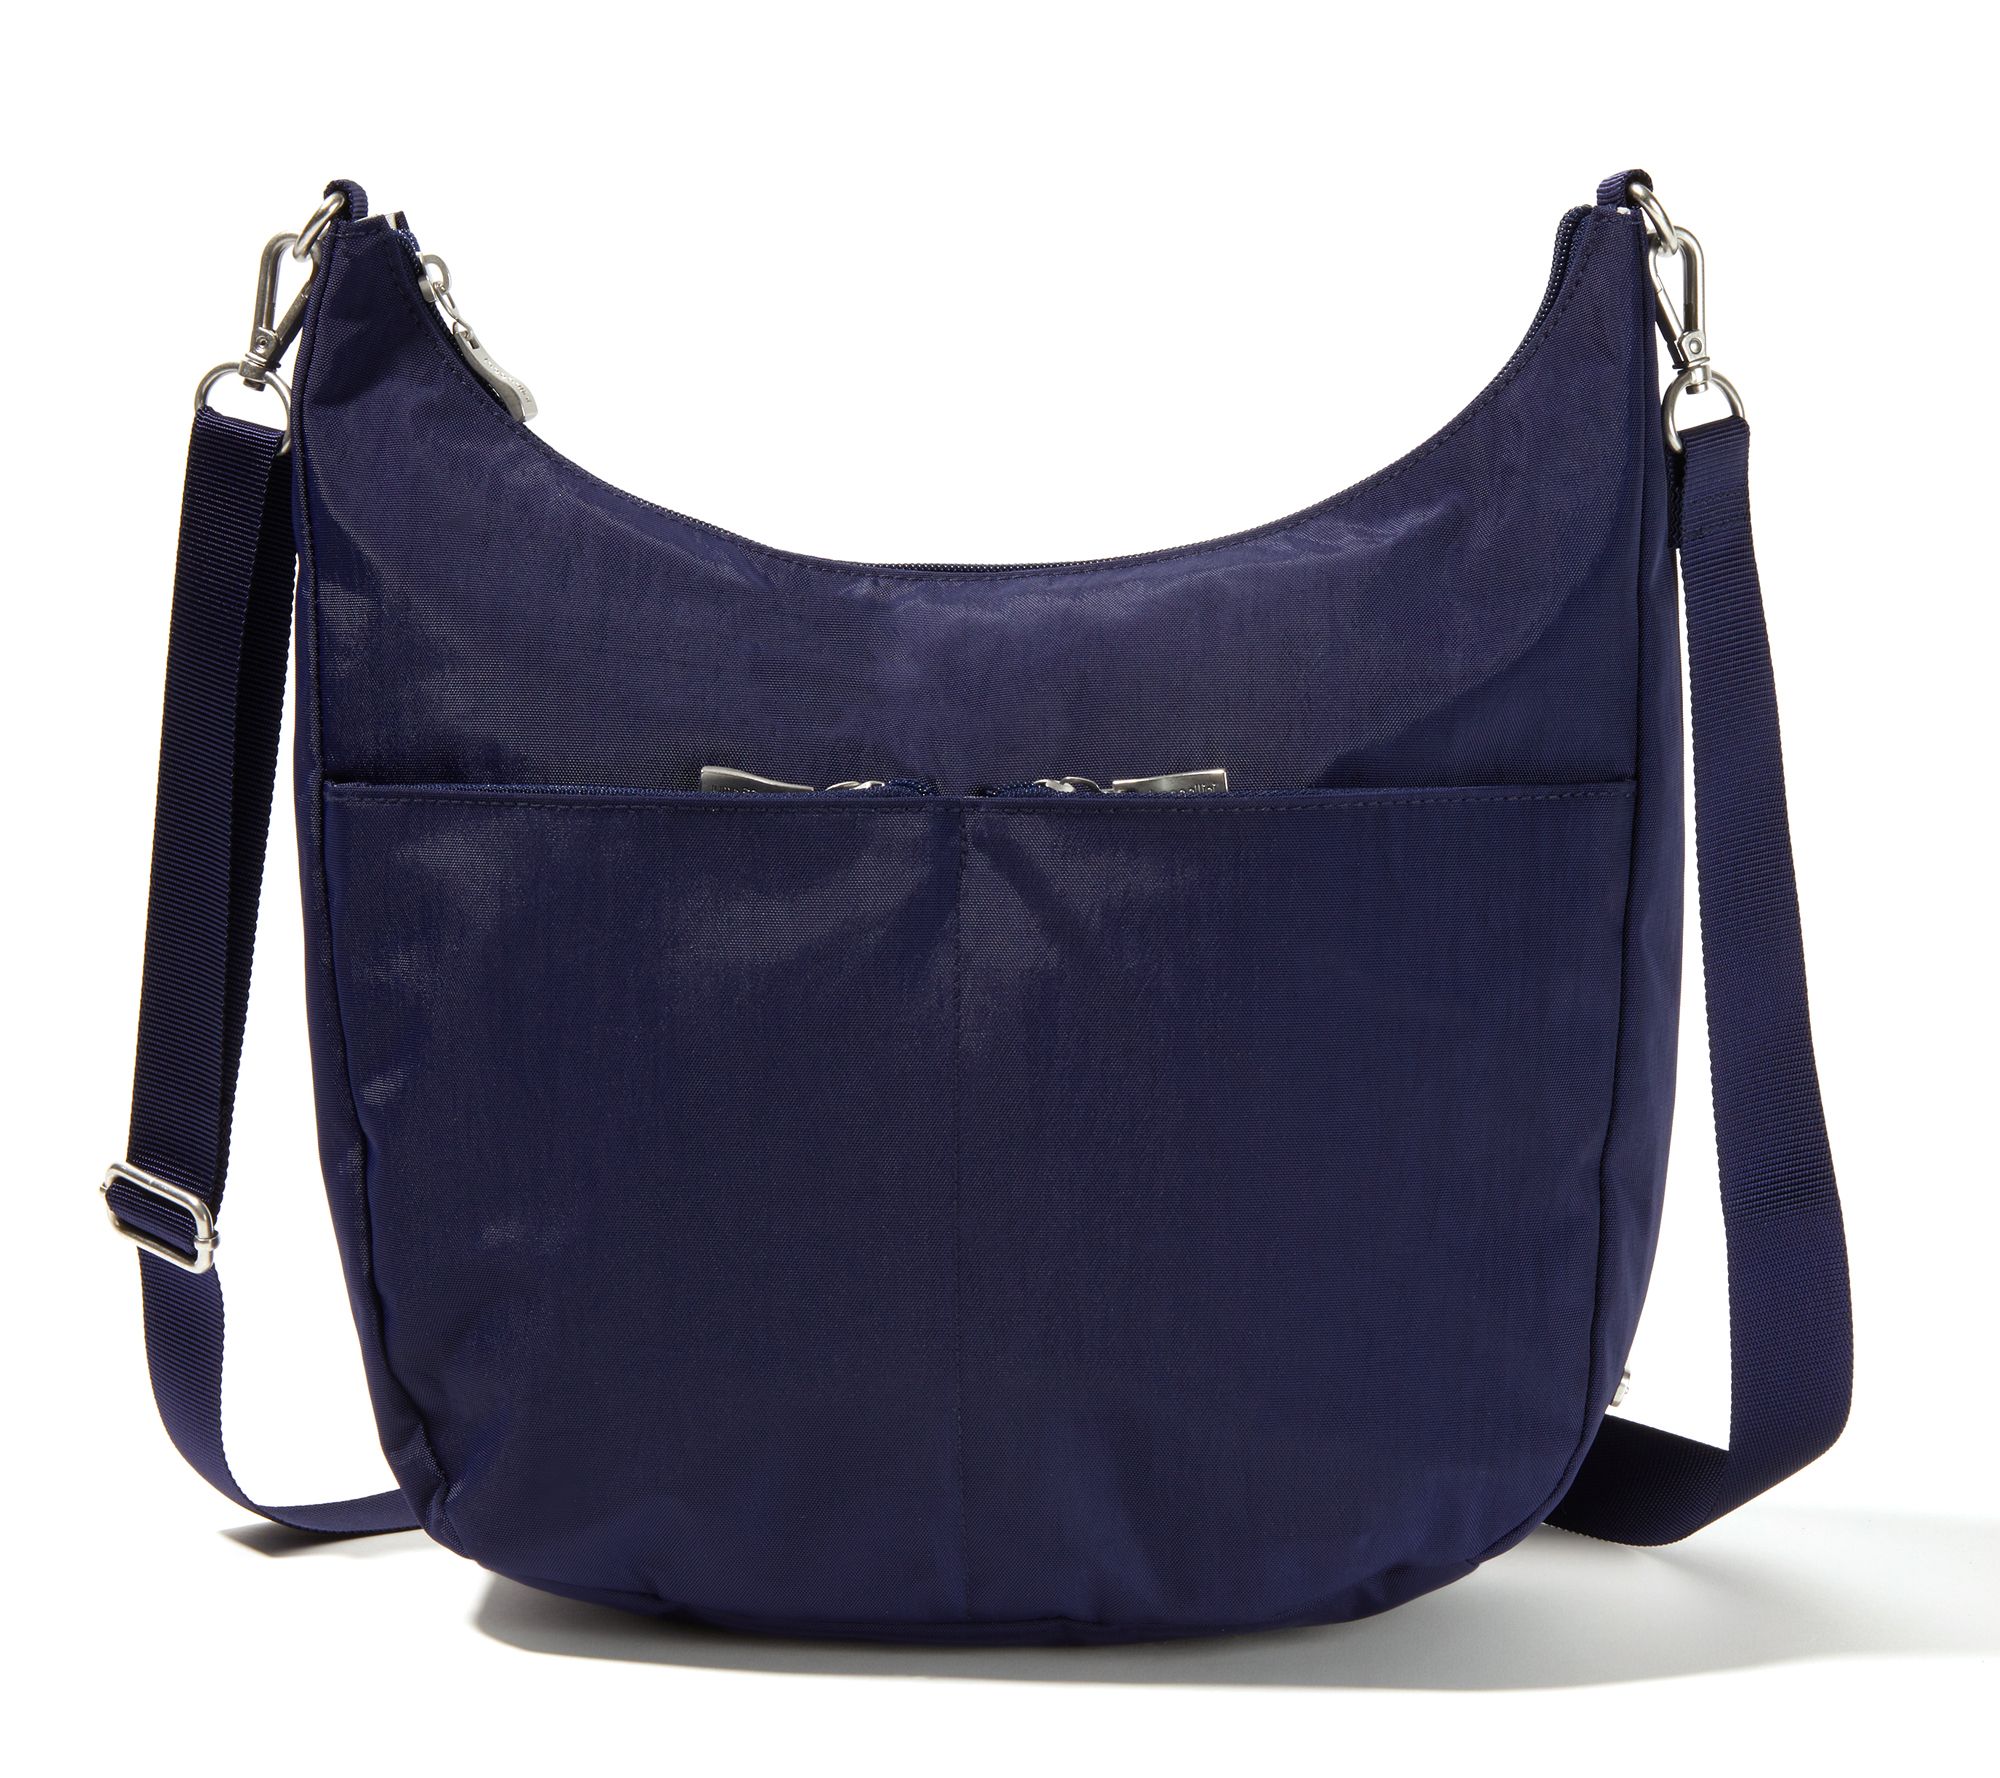 Baggallini Women's Rfid Bryant Mini Pouch Crossbody Bag : Target